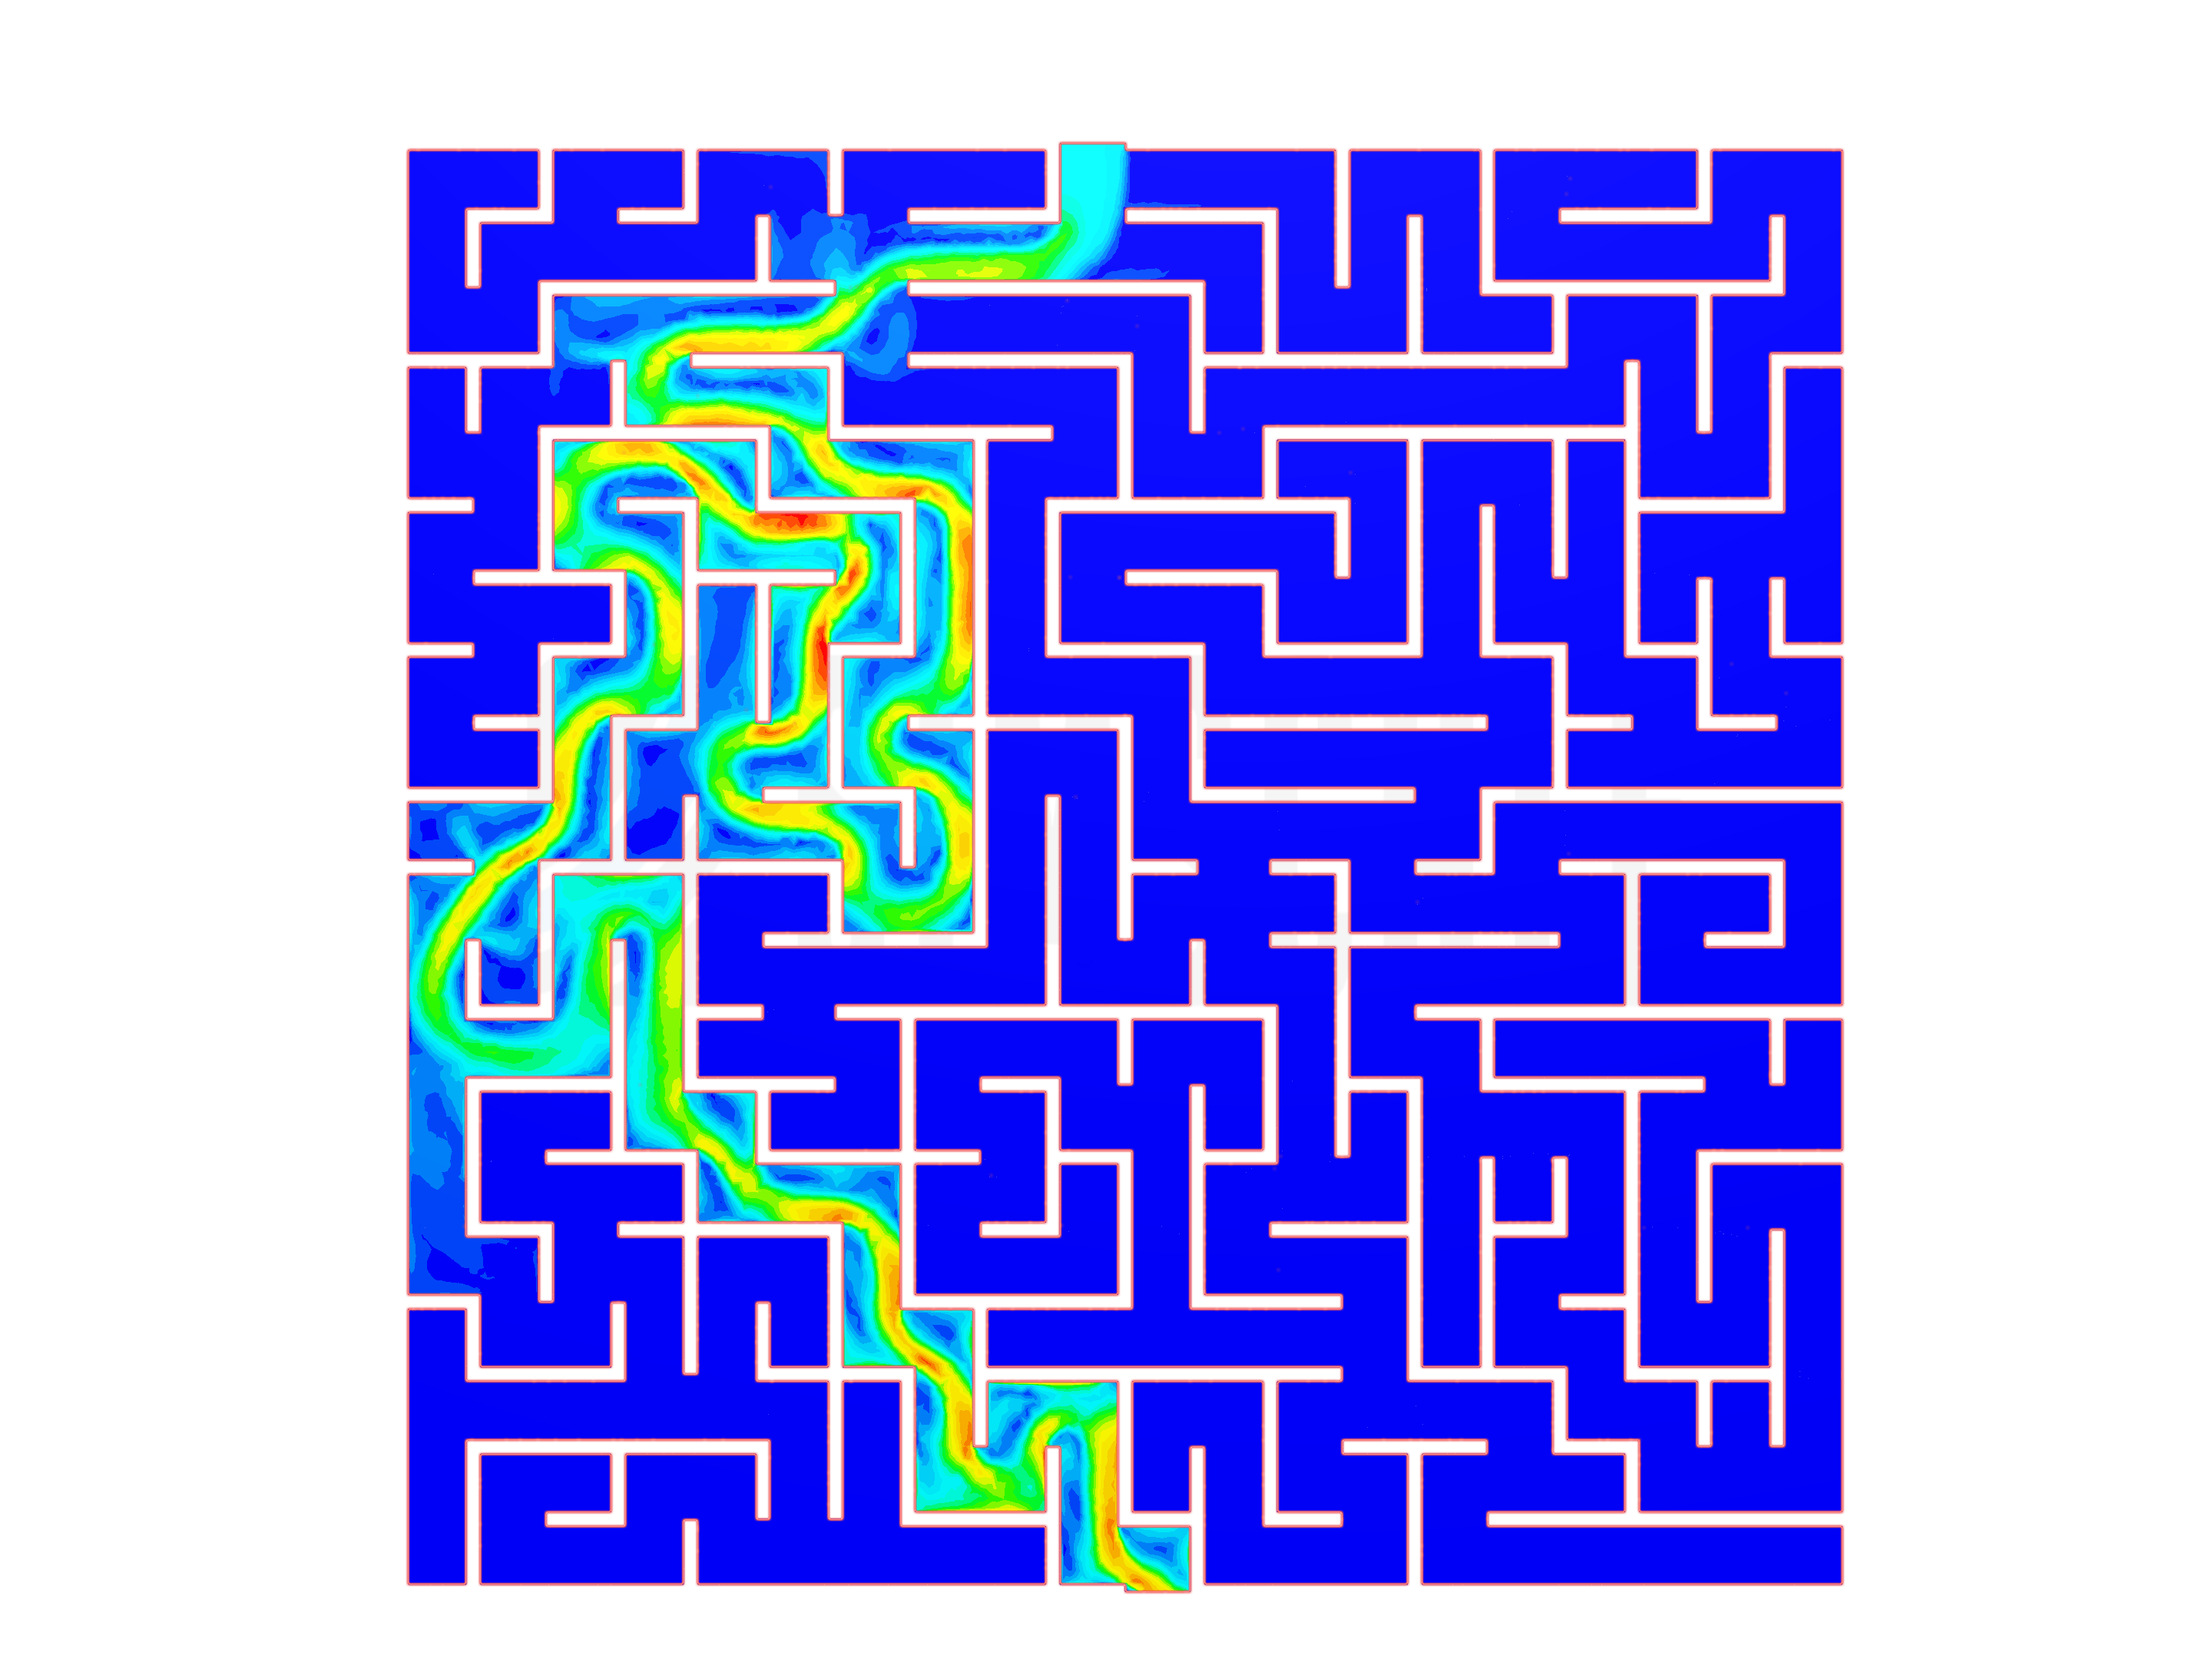 Maze solving image